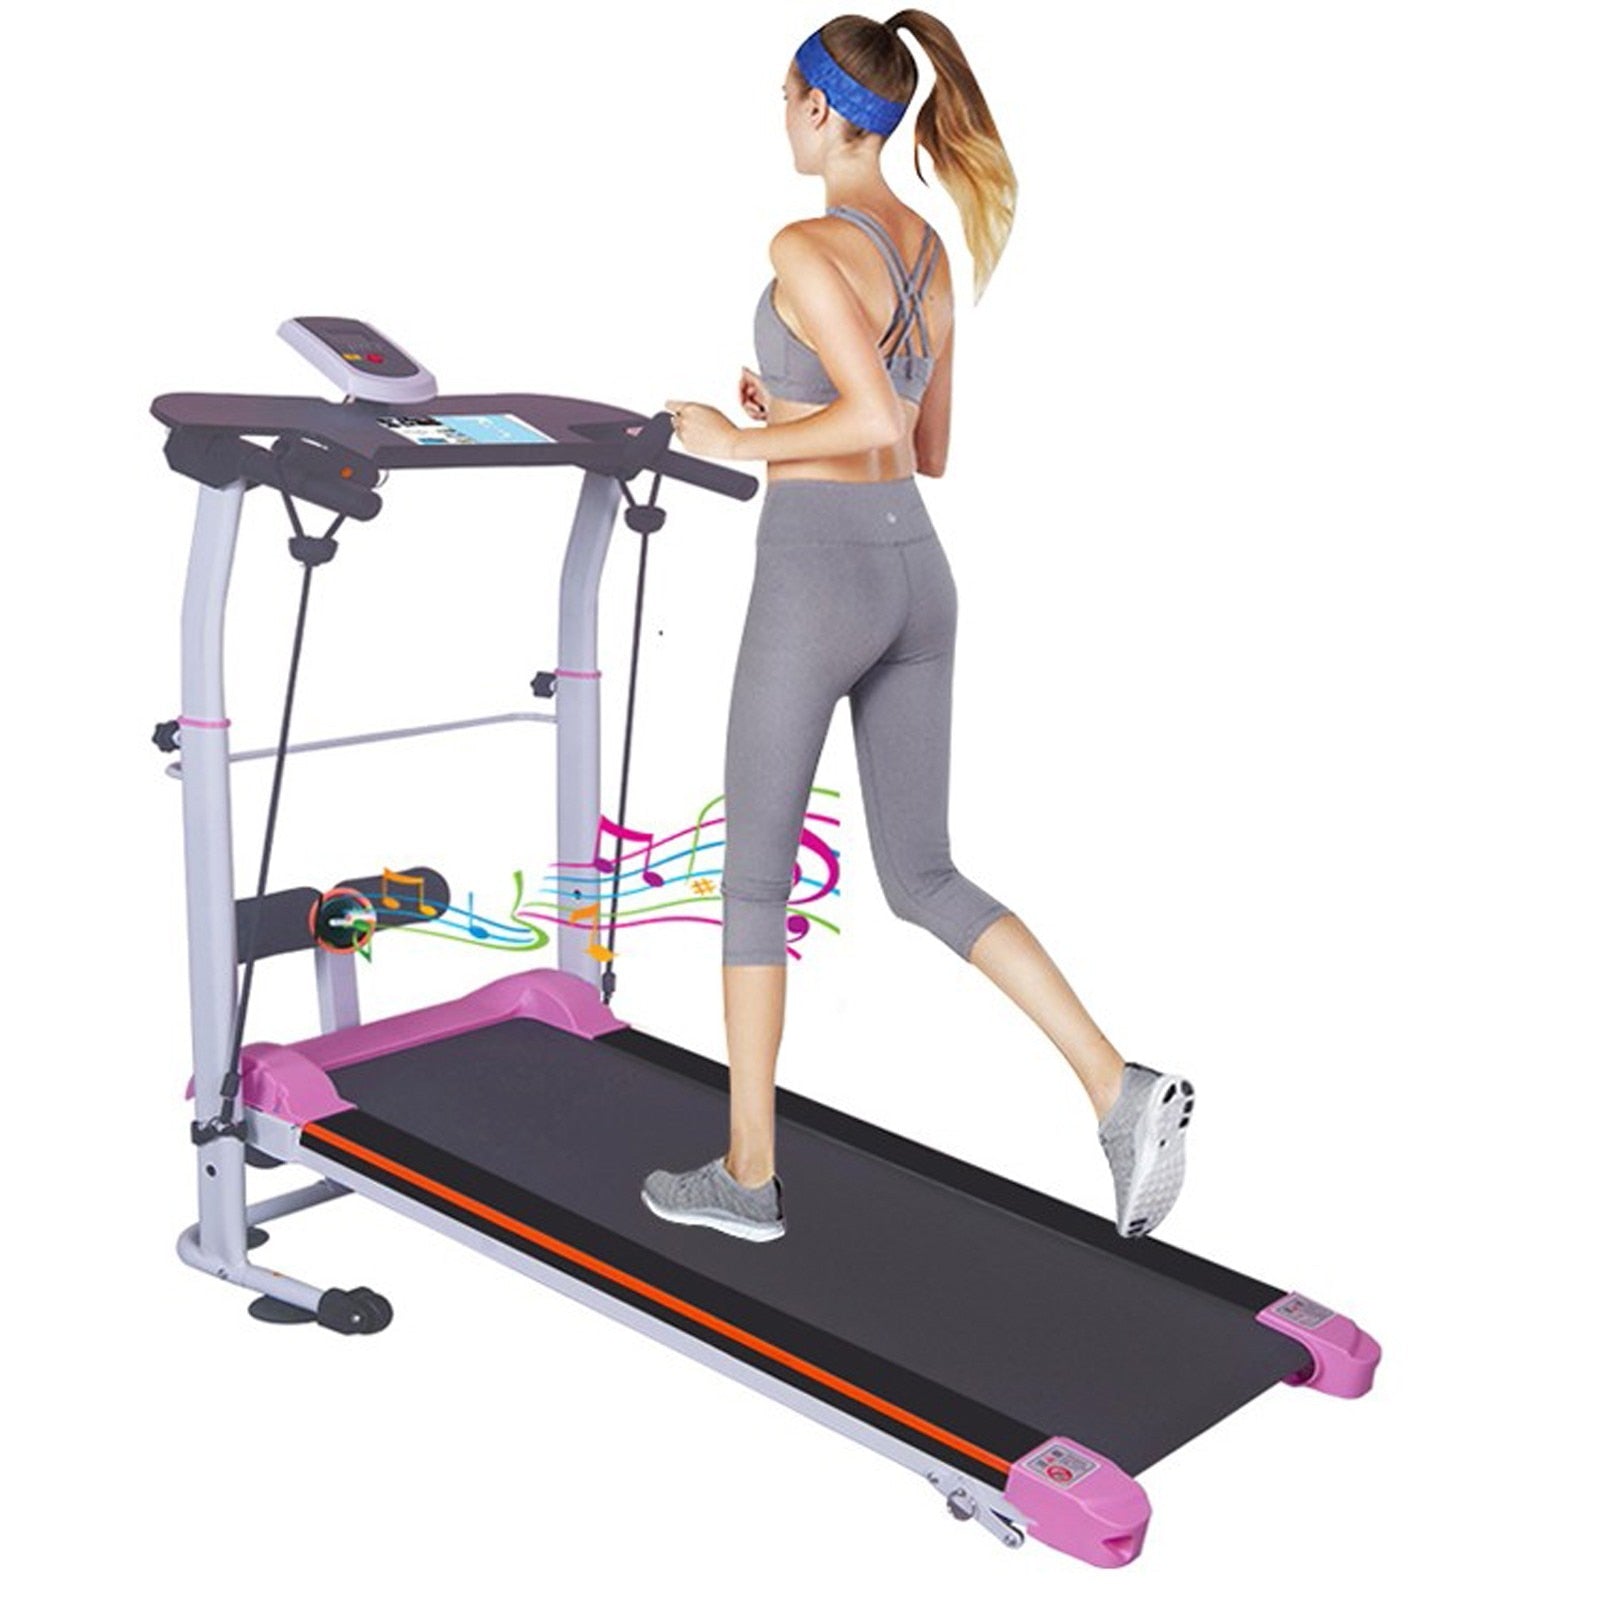 Mini Exercise Treadmill Fitness Equipment For Treadmill Bike Foldable Mini Mechanical Treadmill Running Machine For Women#HWC